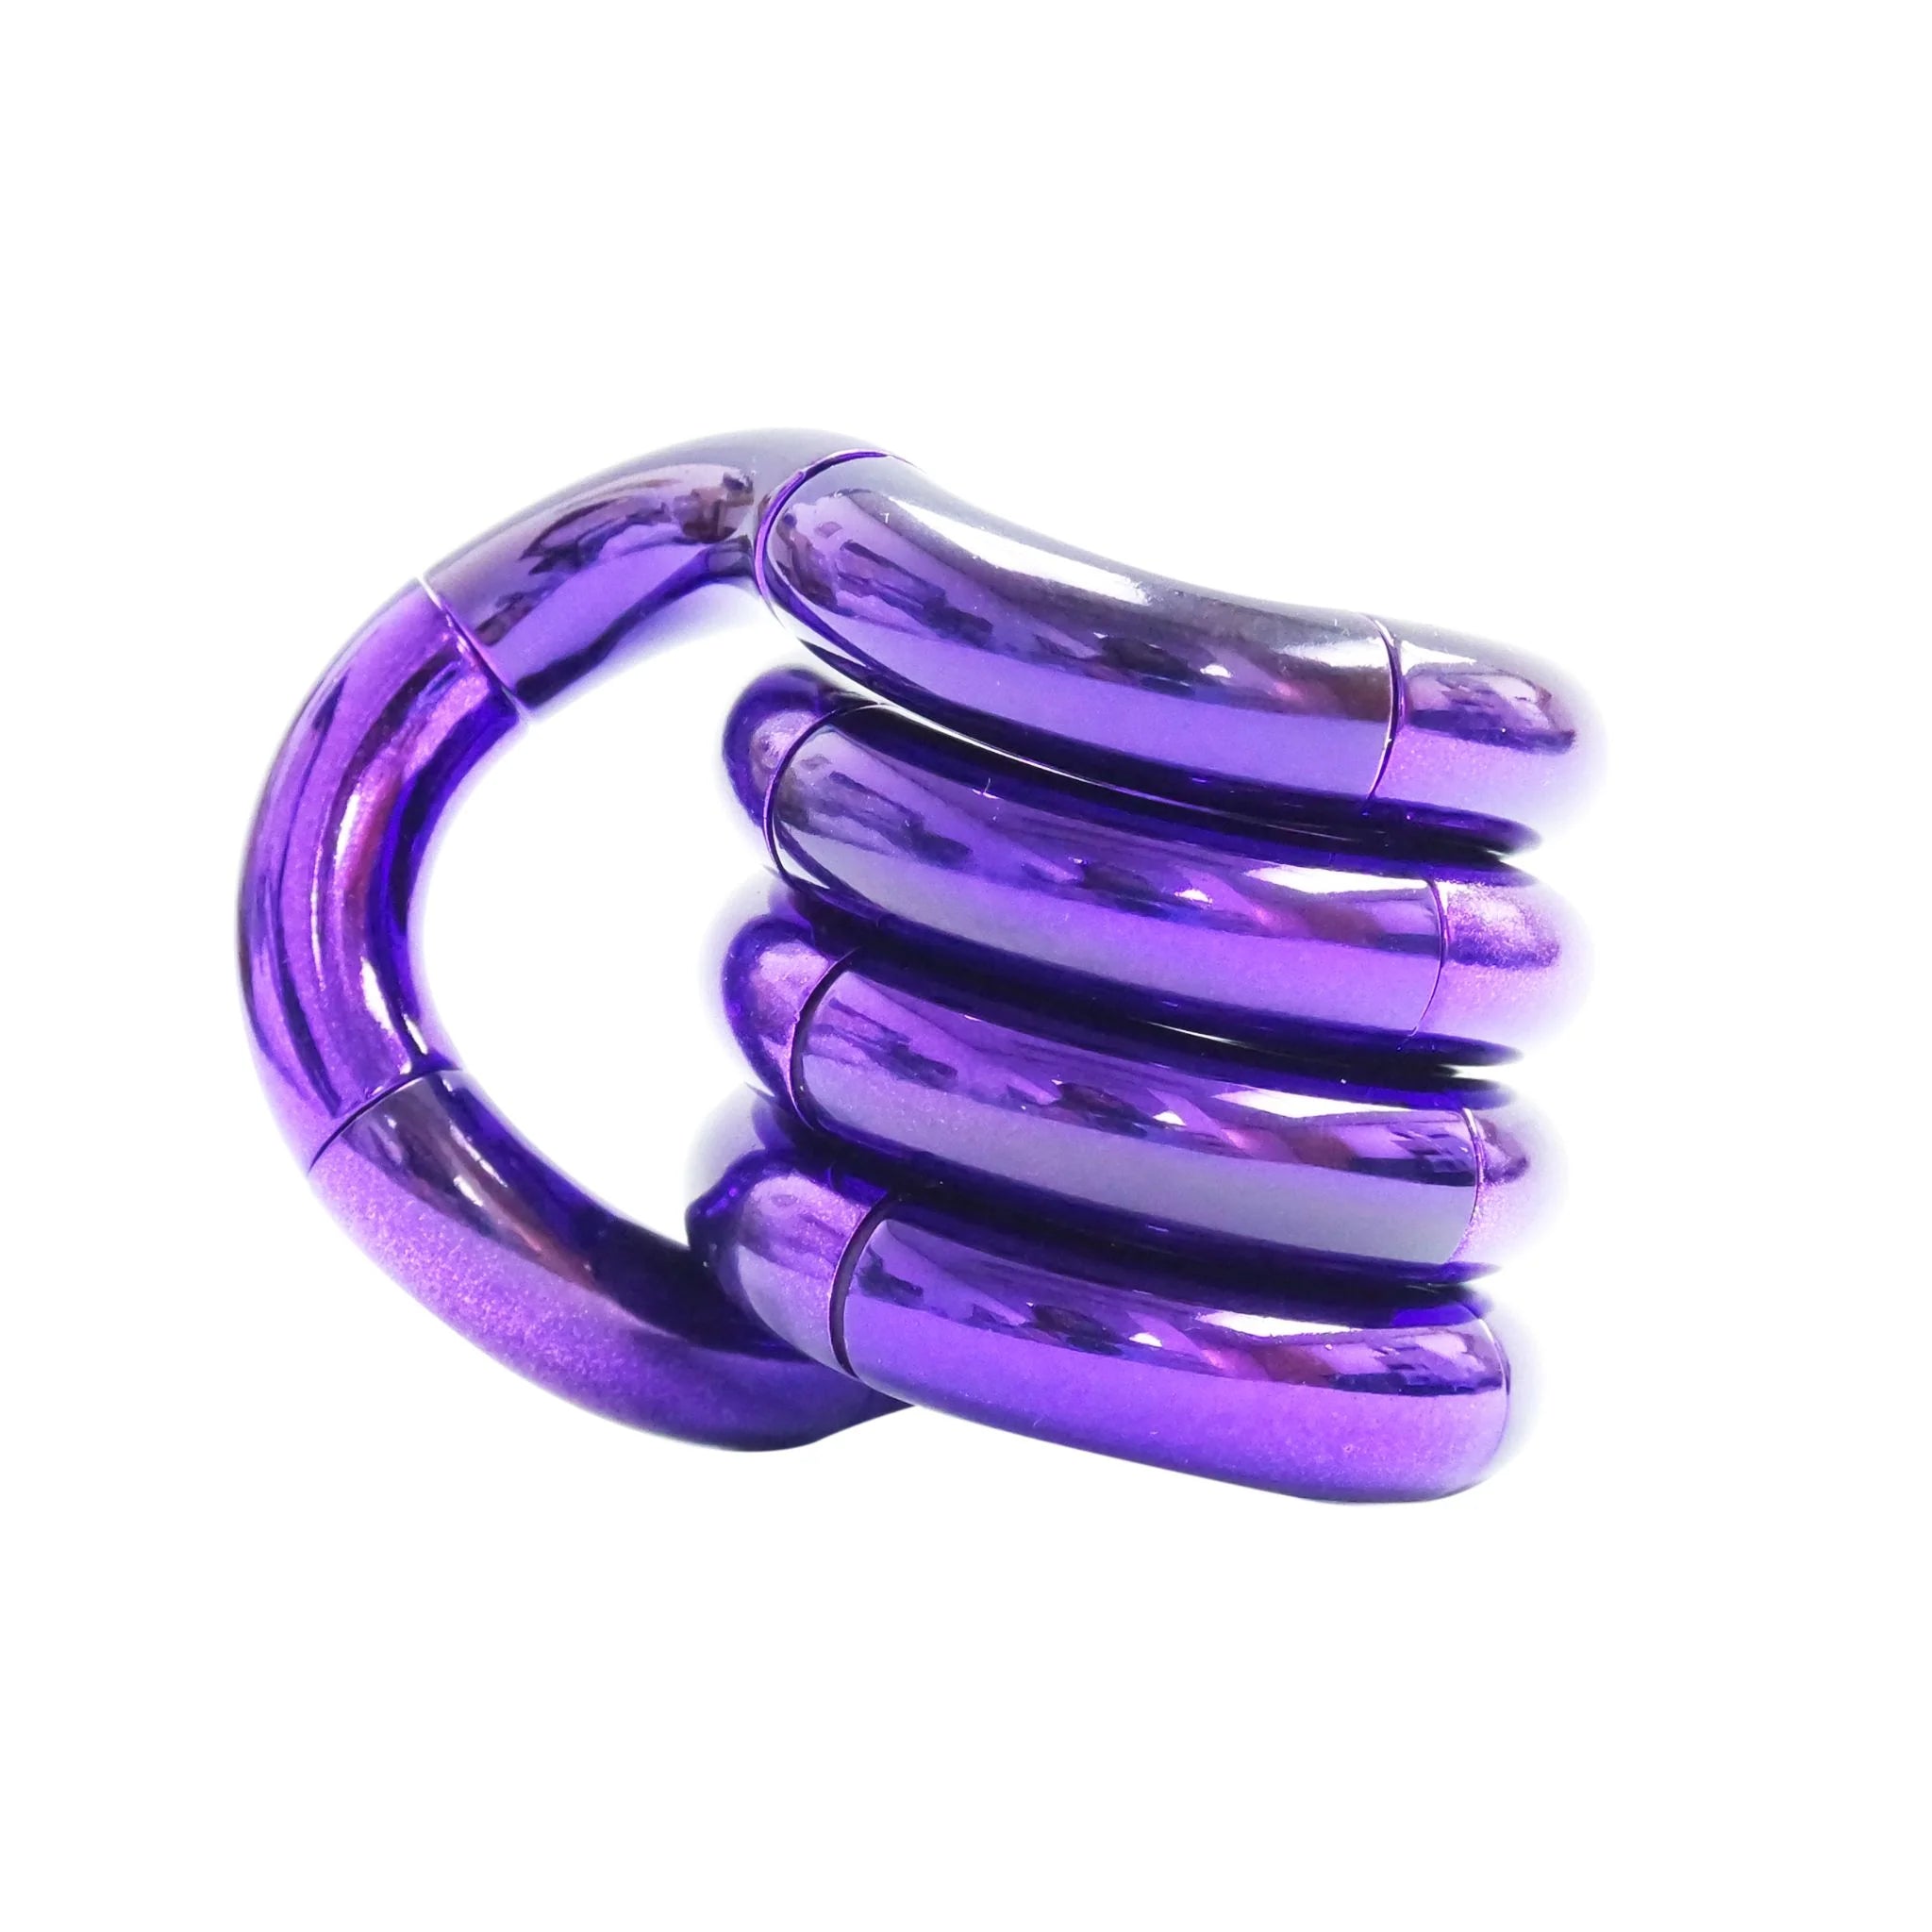 The purple Tangle Jr. Metallic.